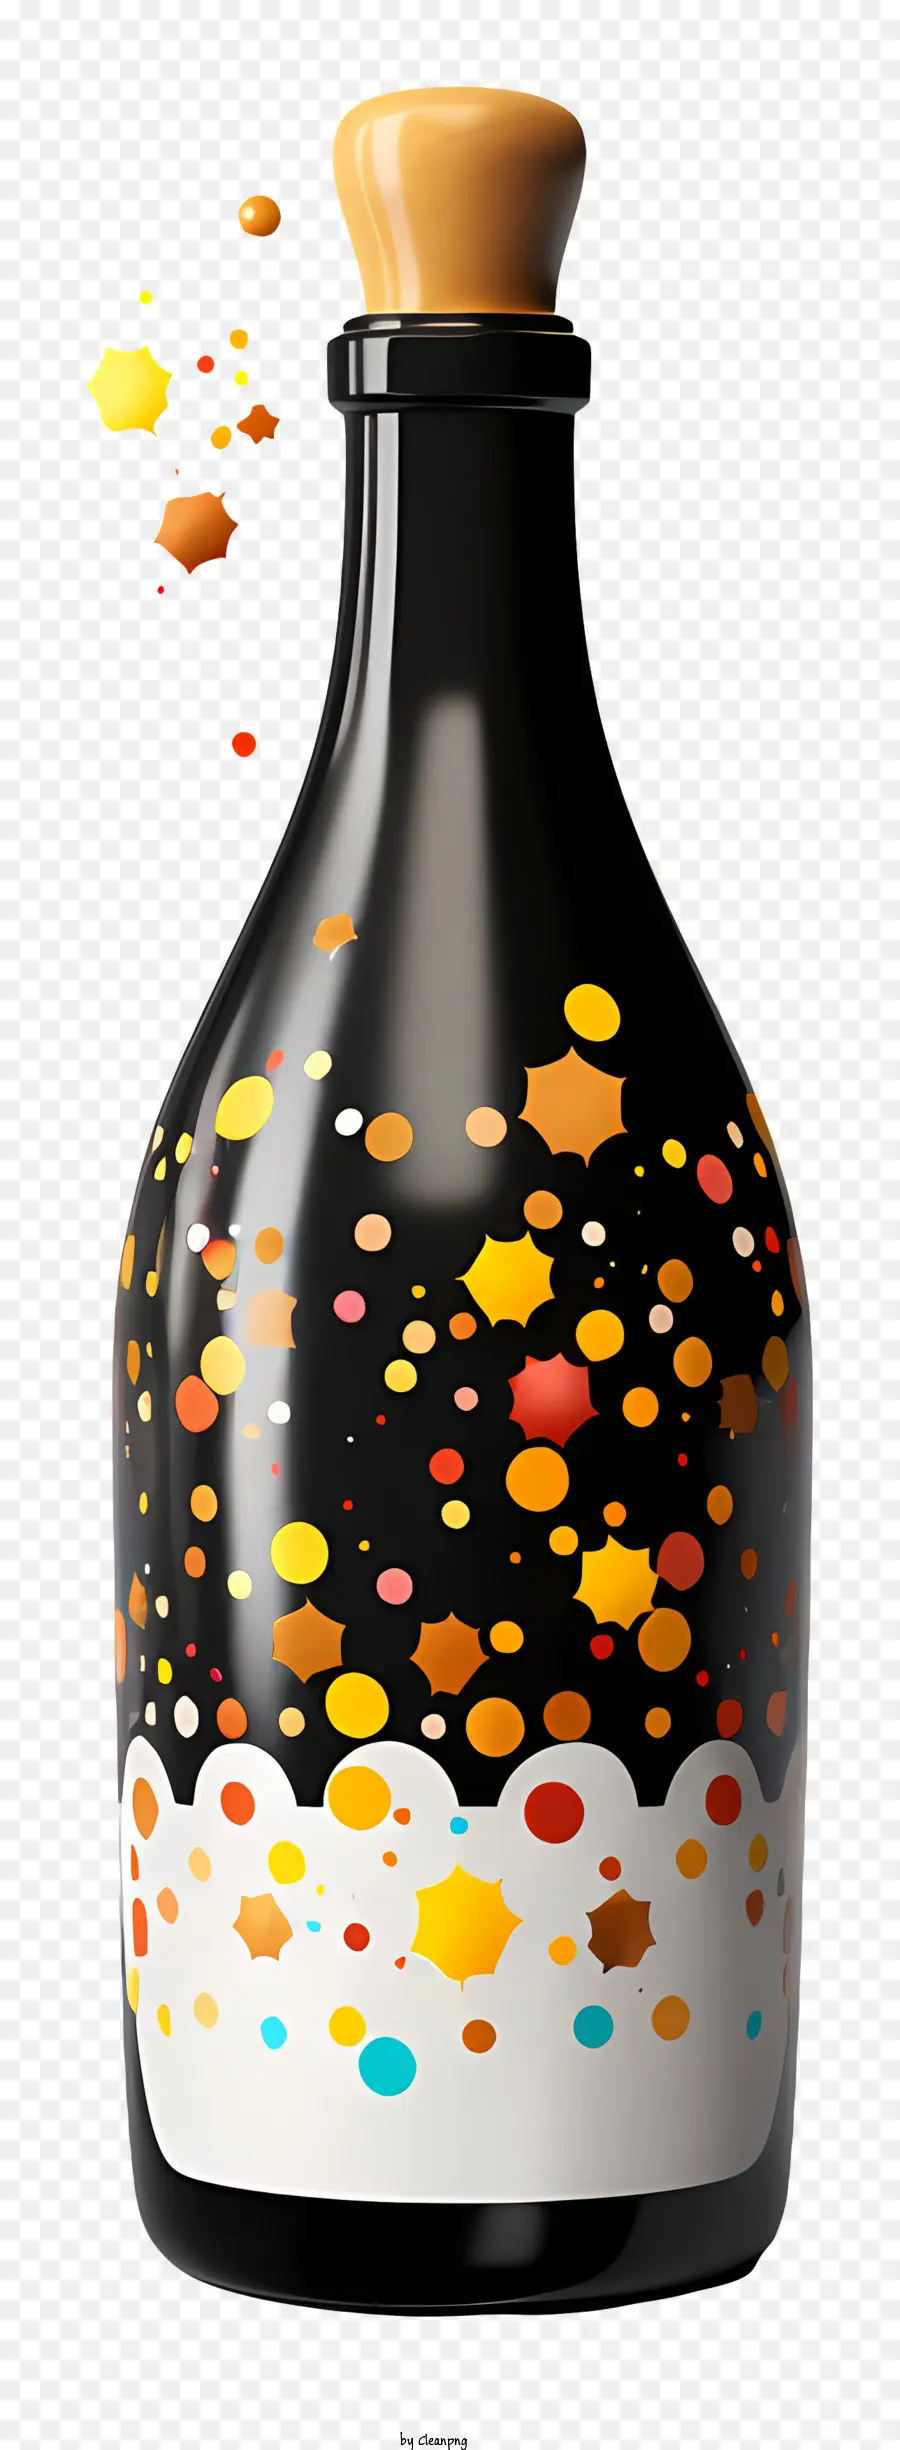 Glasflasche Holzkappe farbenfrohe Konfetti funkelnde Konfetti Schwarzer Hintergrund - Bunte Konfetti in Glasflasche mit schwarzem Hintergrund